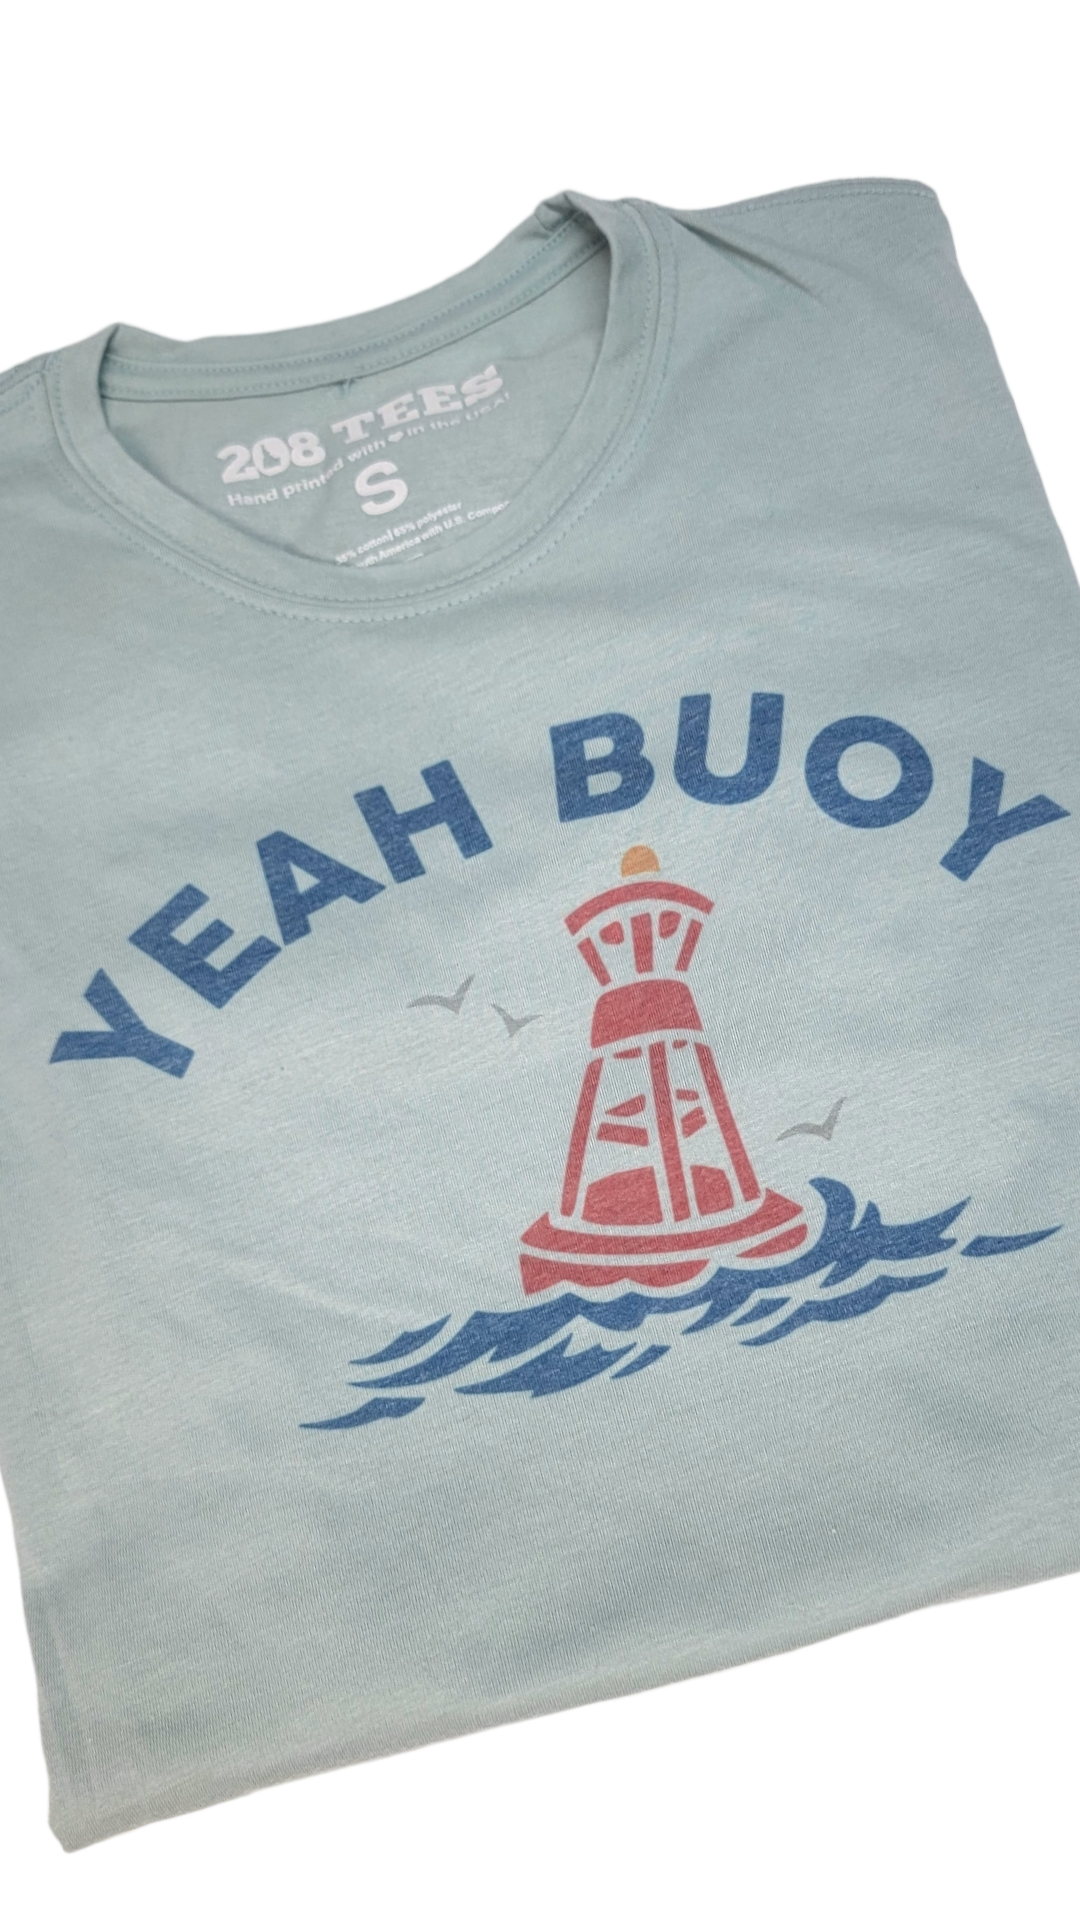 "Yeah Bouy" Short sleeve T-shirt Unisex - Travelers Trade Post